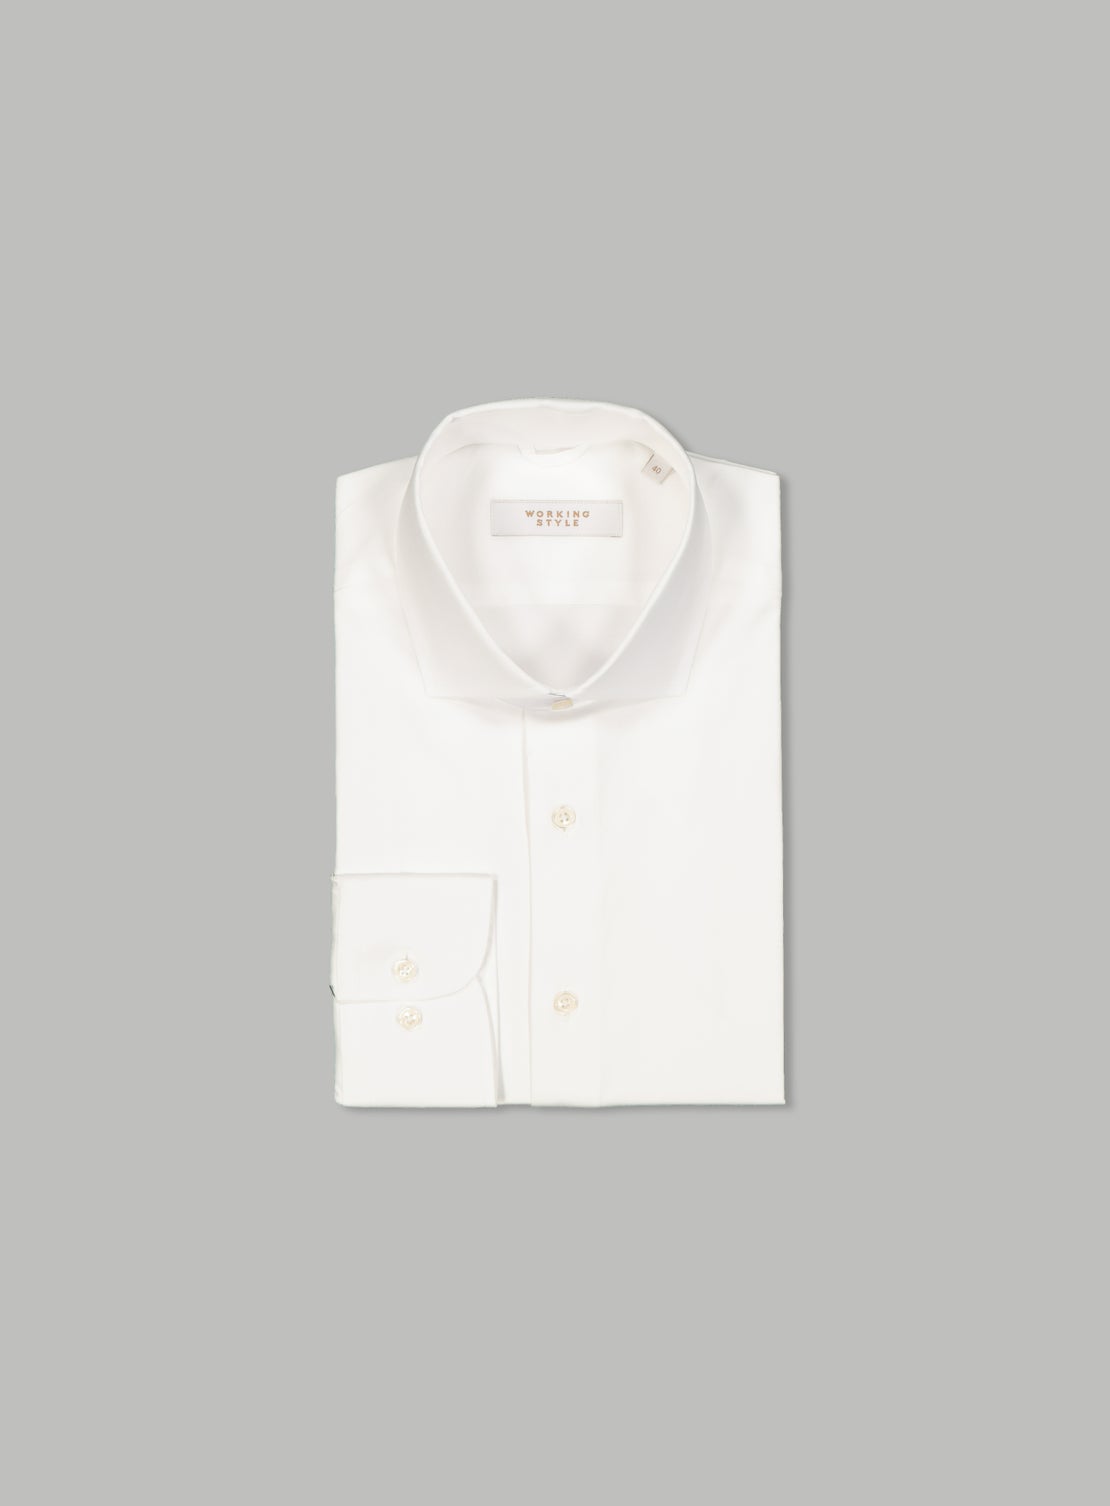 Quin White Essential Shirt